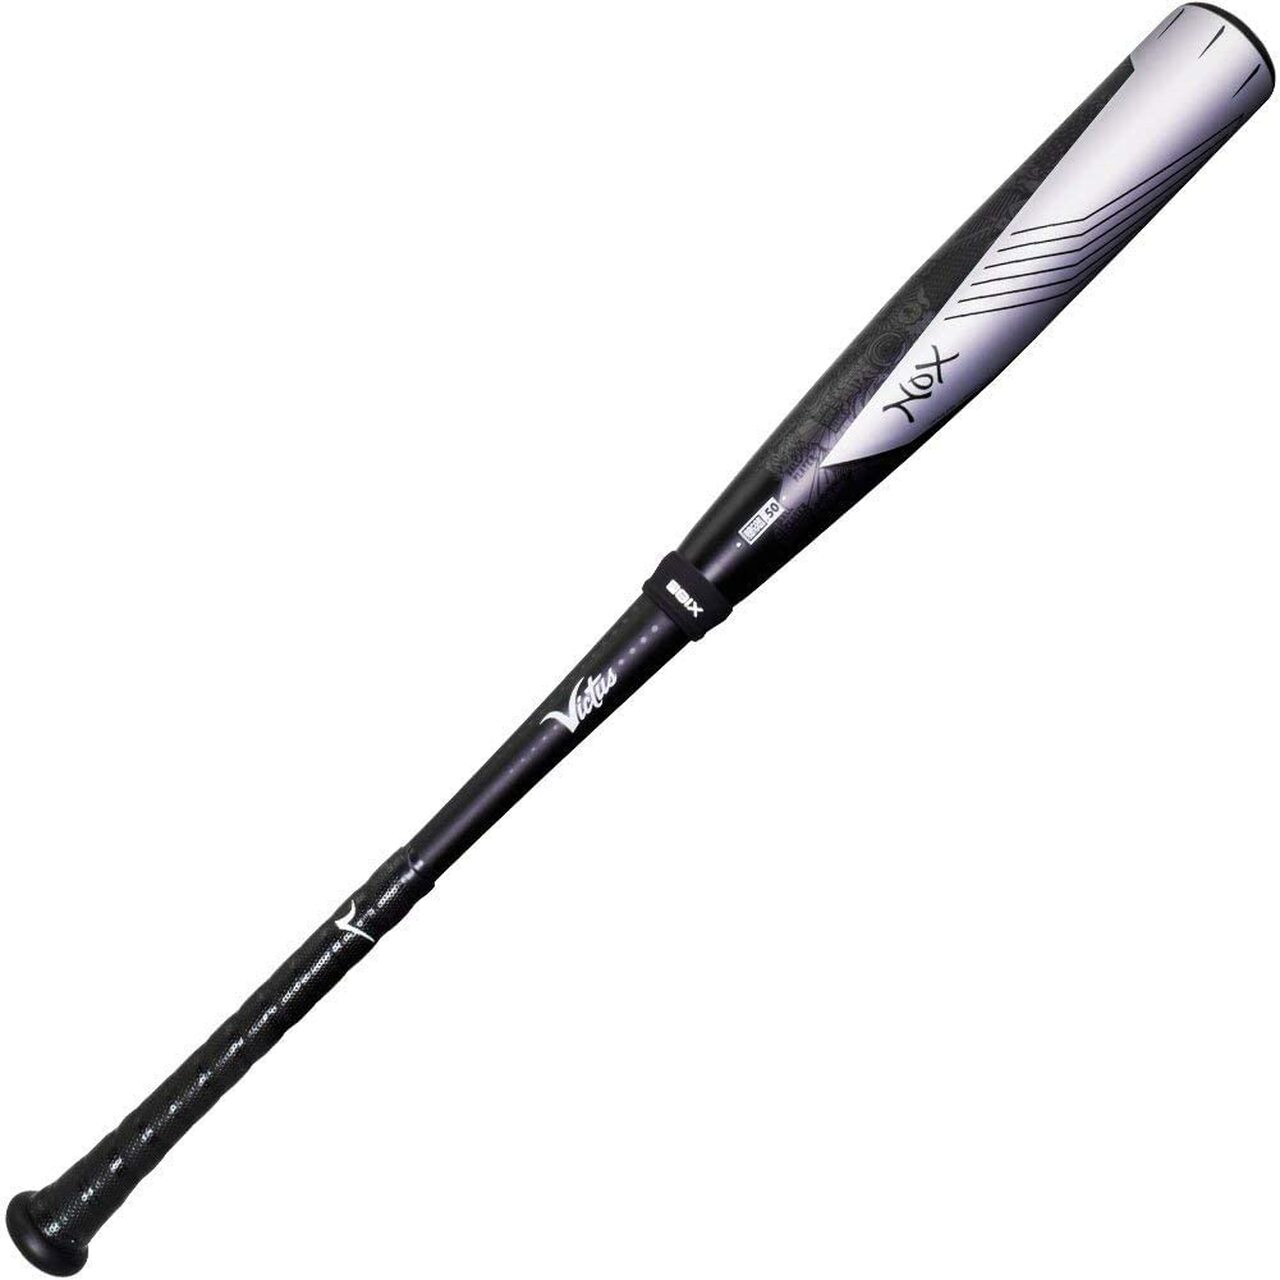 victus-nox-3-baseball-bat-31-inch-28-oz VCBN-3128 Victus          NOX BBCOR   Built with obnoxious speed